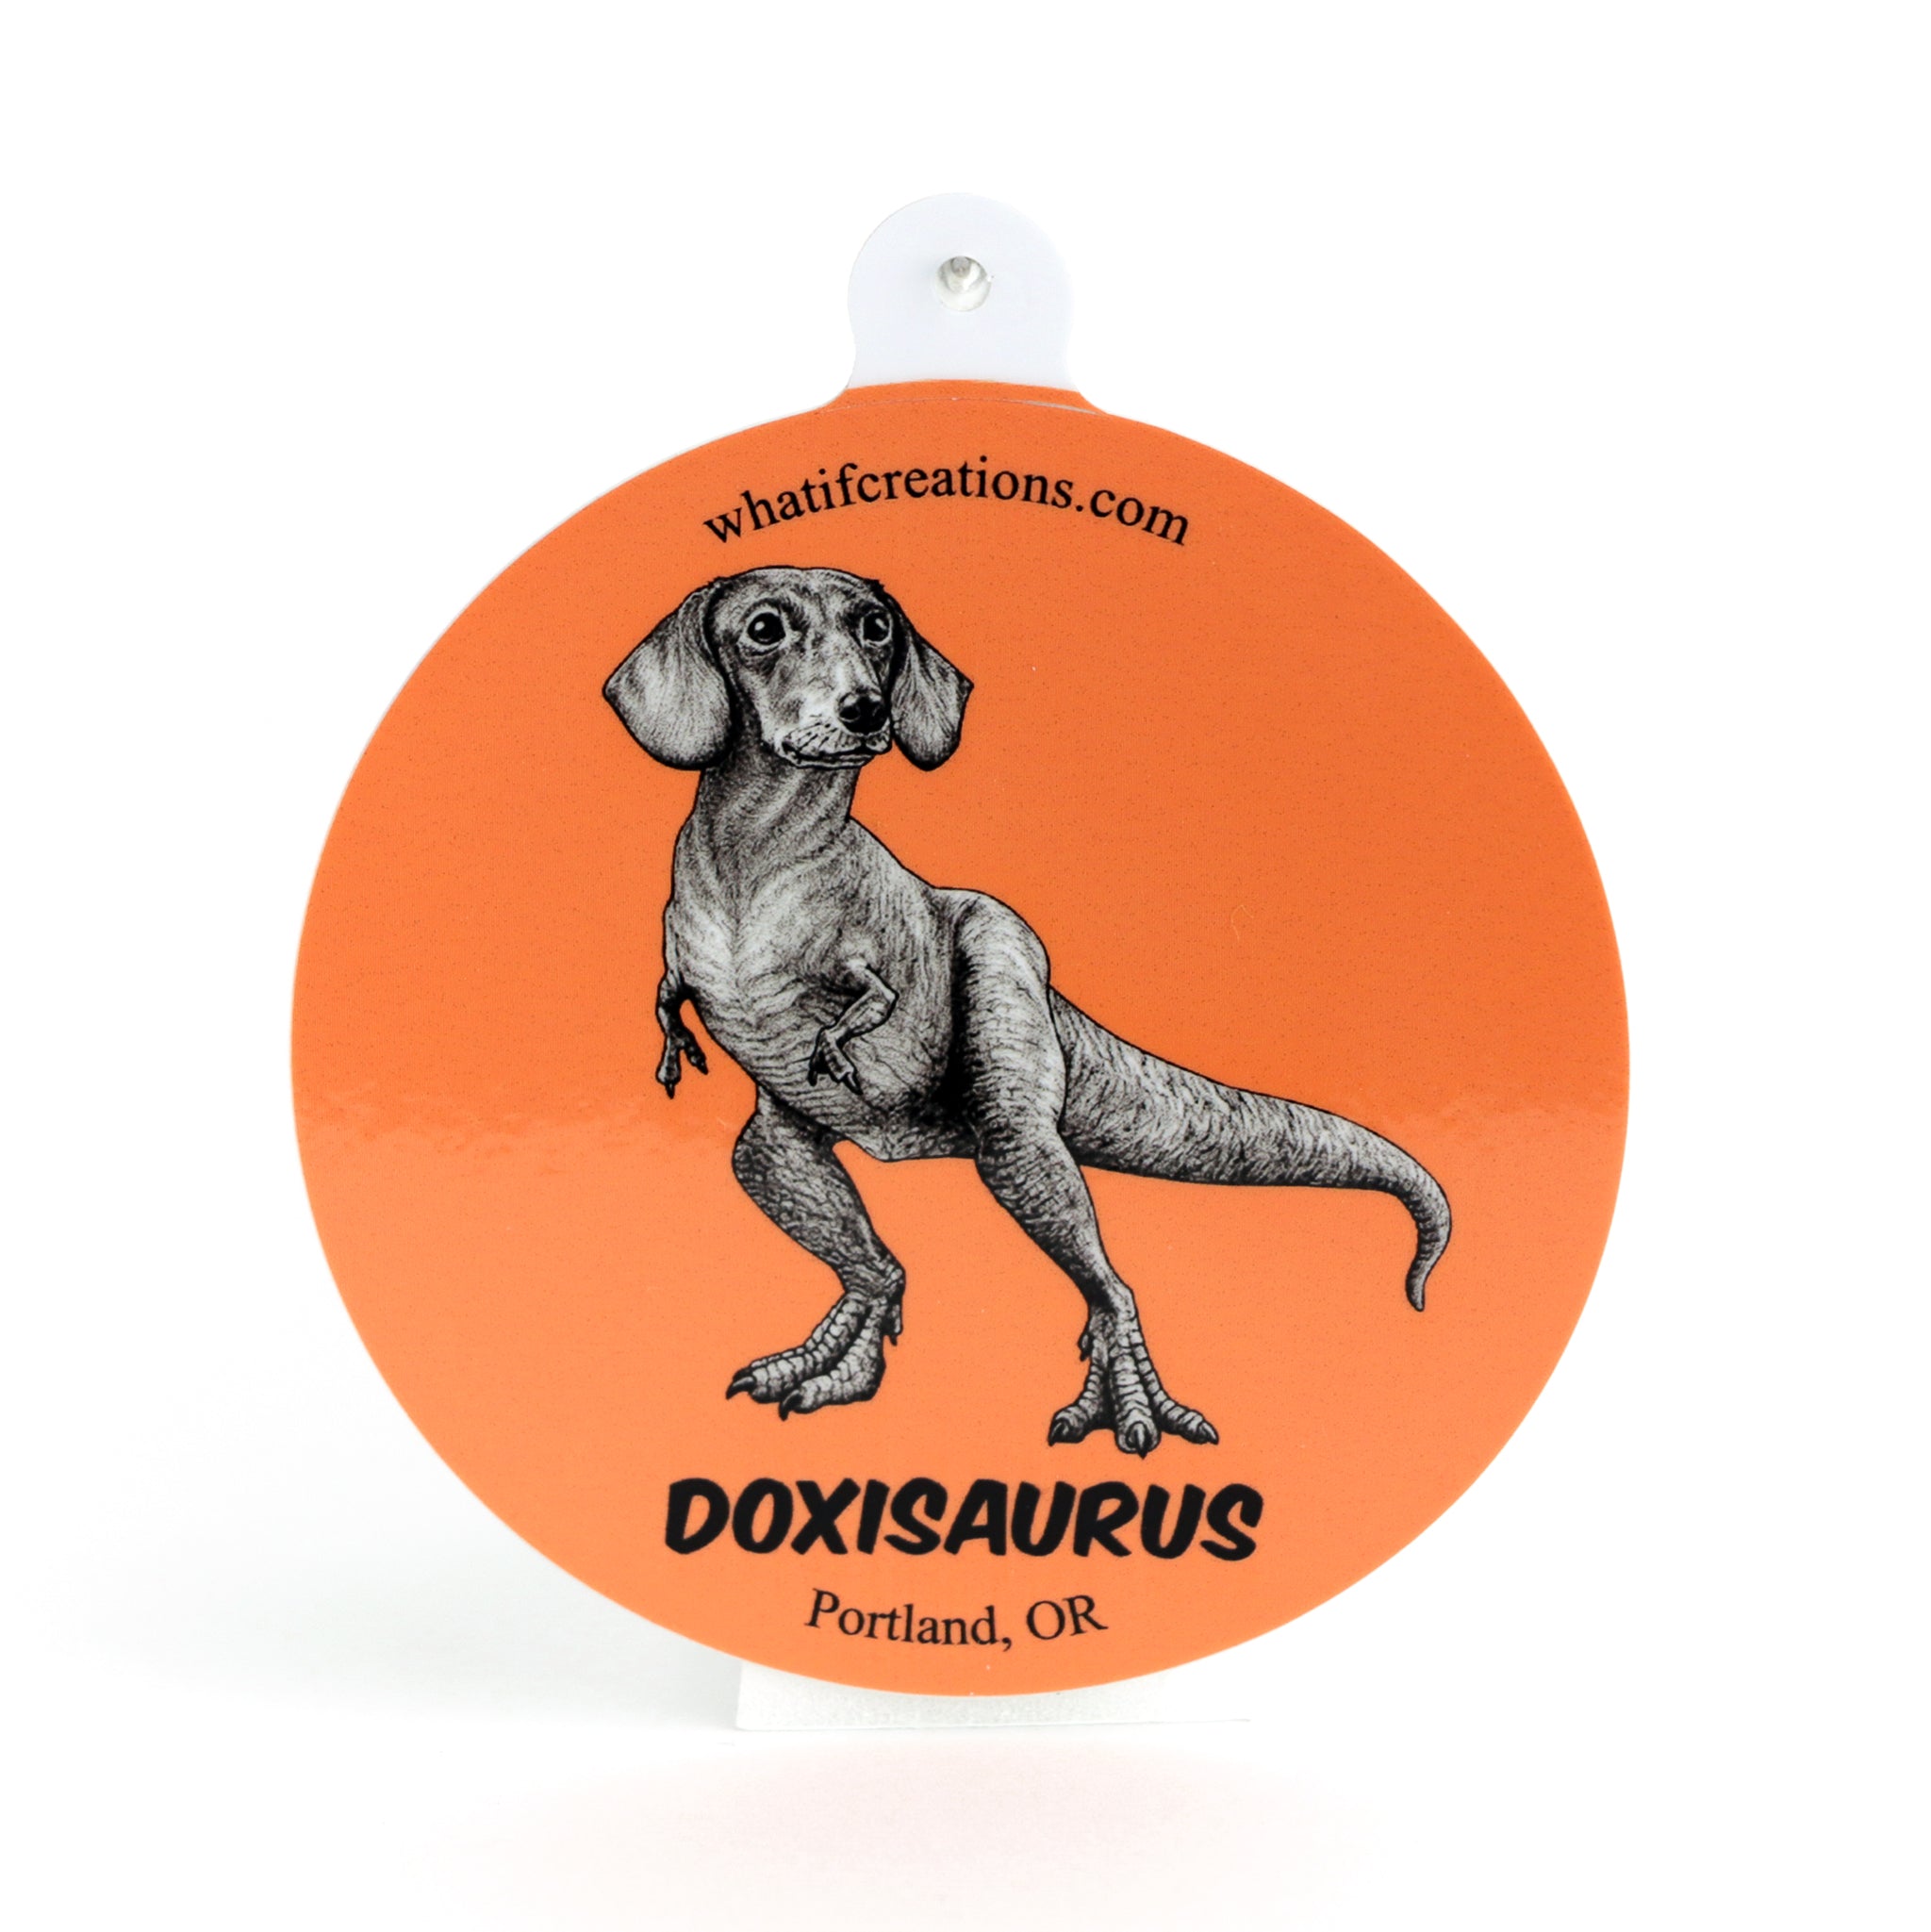 Doxisaurus | Dachshund + TRex Hybrid Animal | 3" Vinyl Sticker